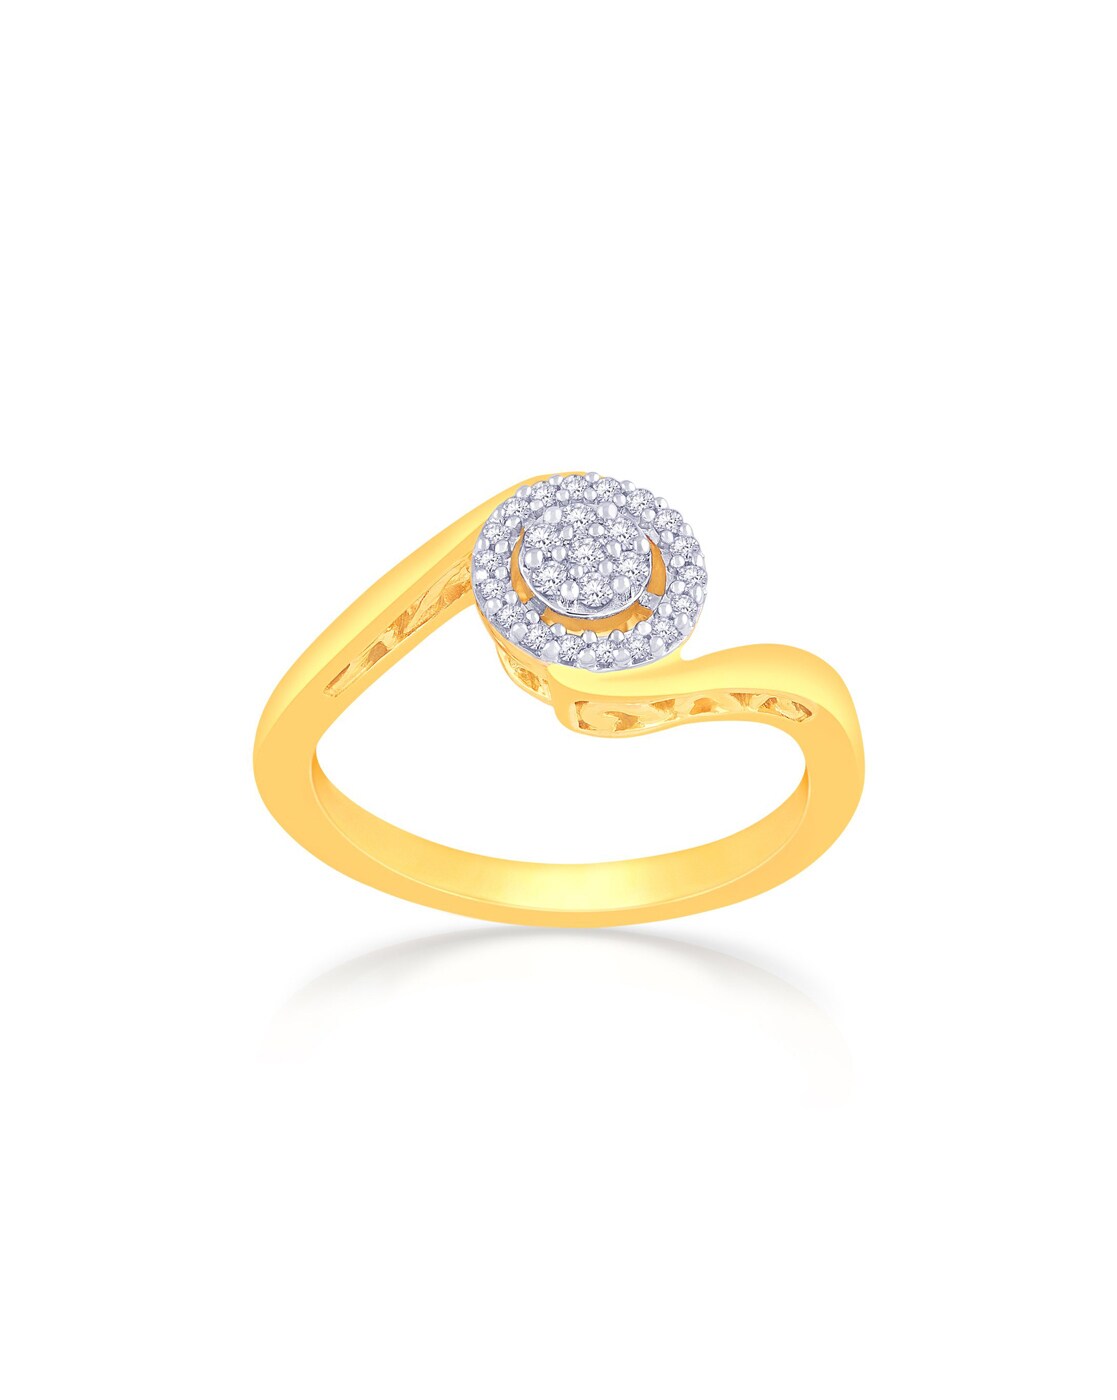 Malabar light weight Cocktail ring designs | Malabar bridal gold rings | Gold  ring designs| Malabar - YouTube